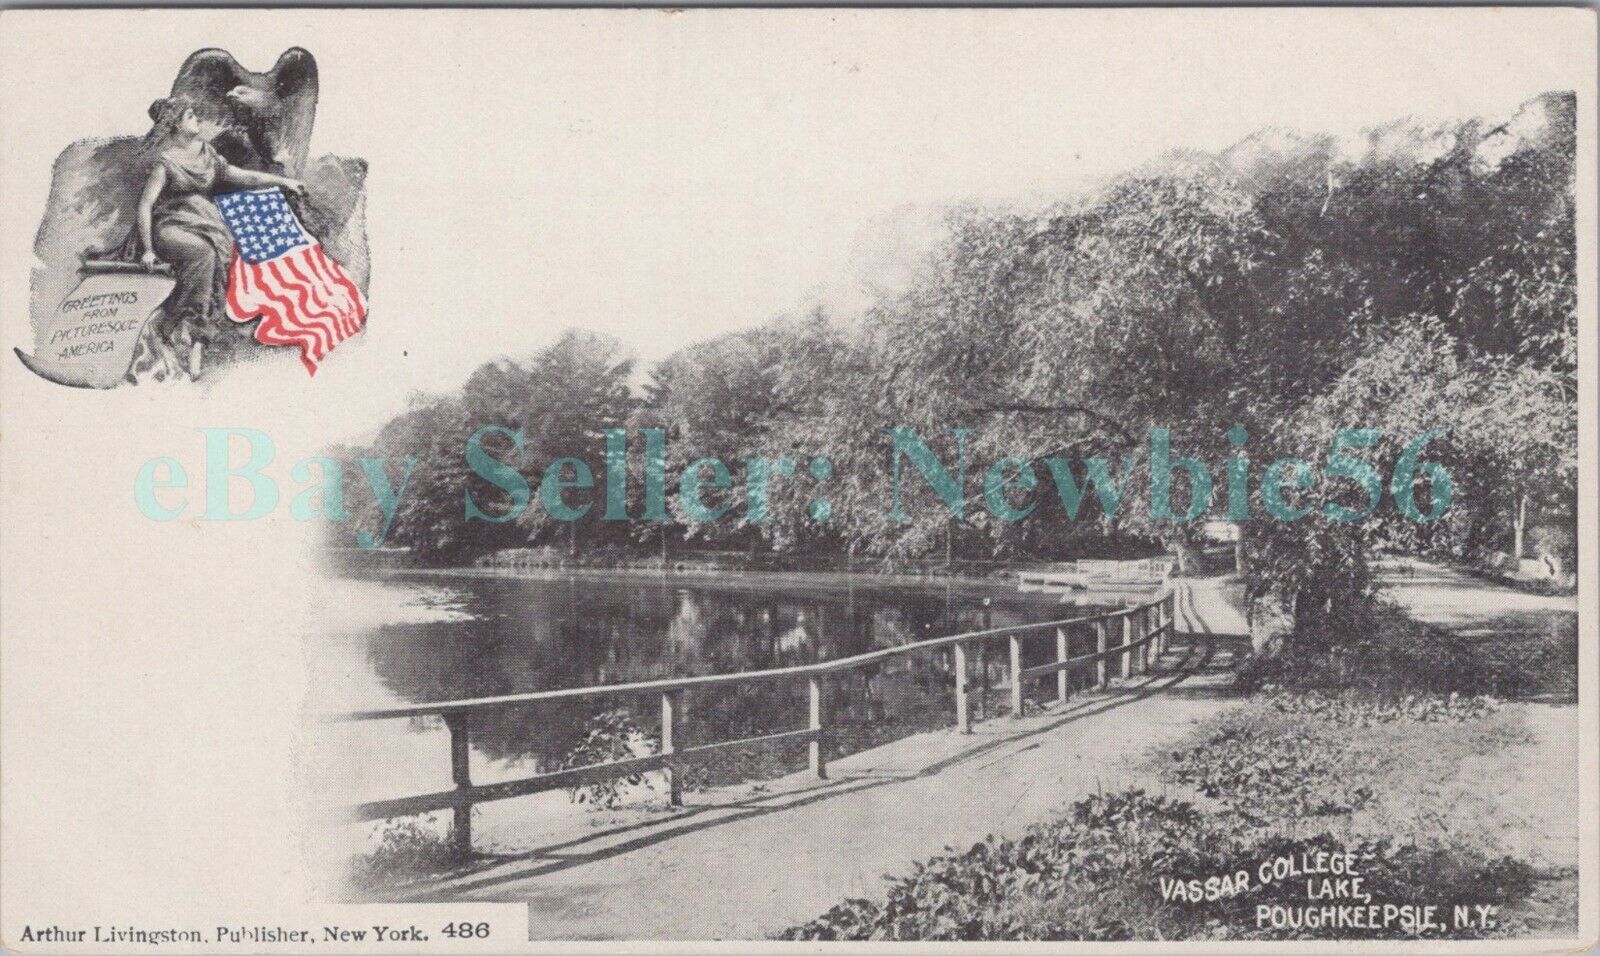 Poughkeepsie NY - VASSAR COLLEGE LAKE - Arthur Livingston Postcard